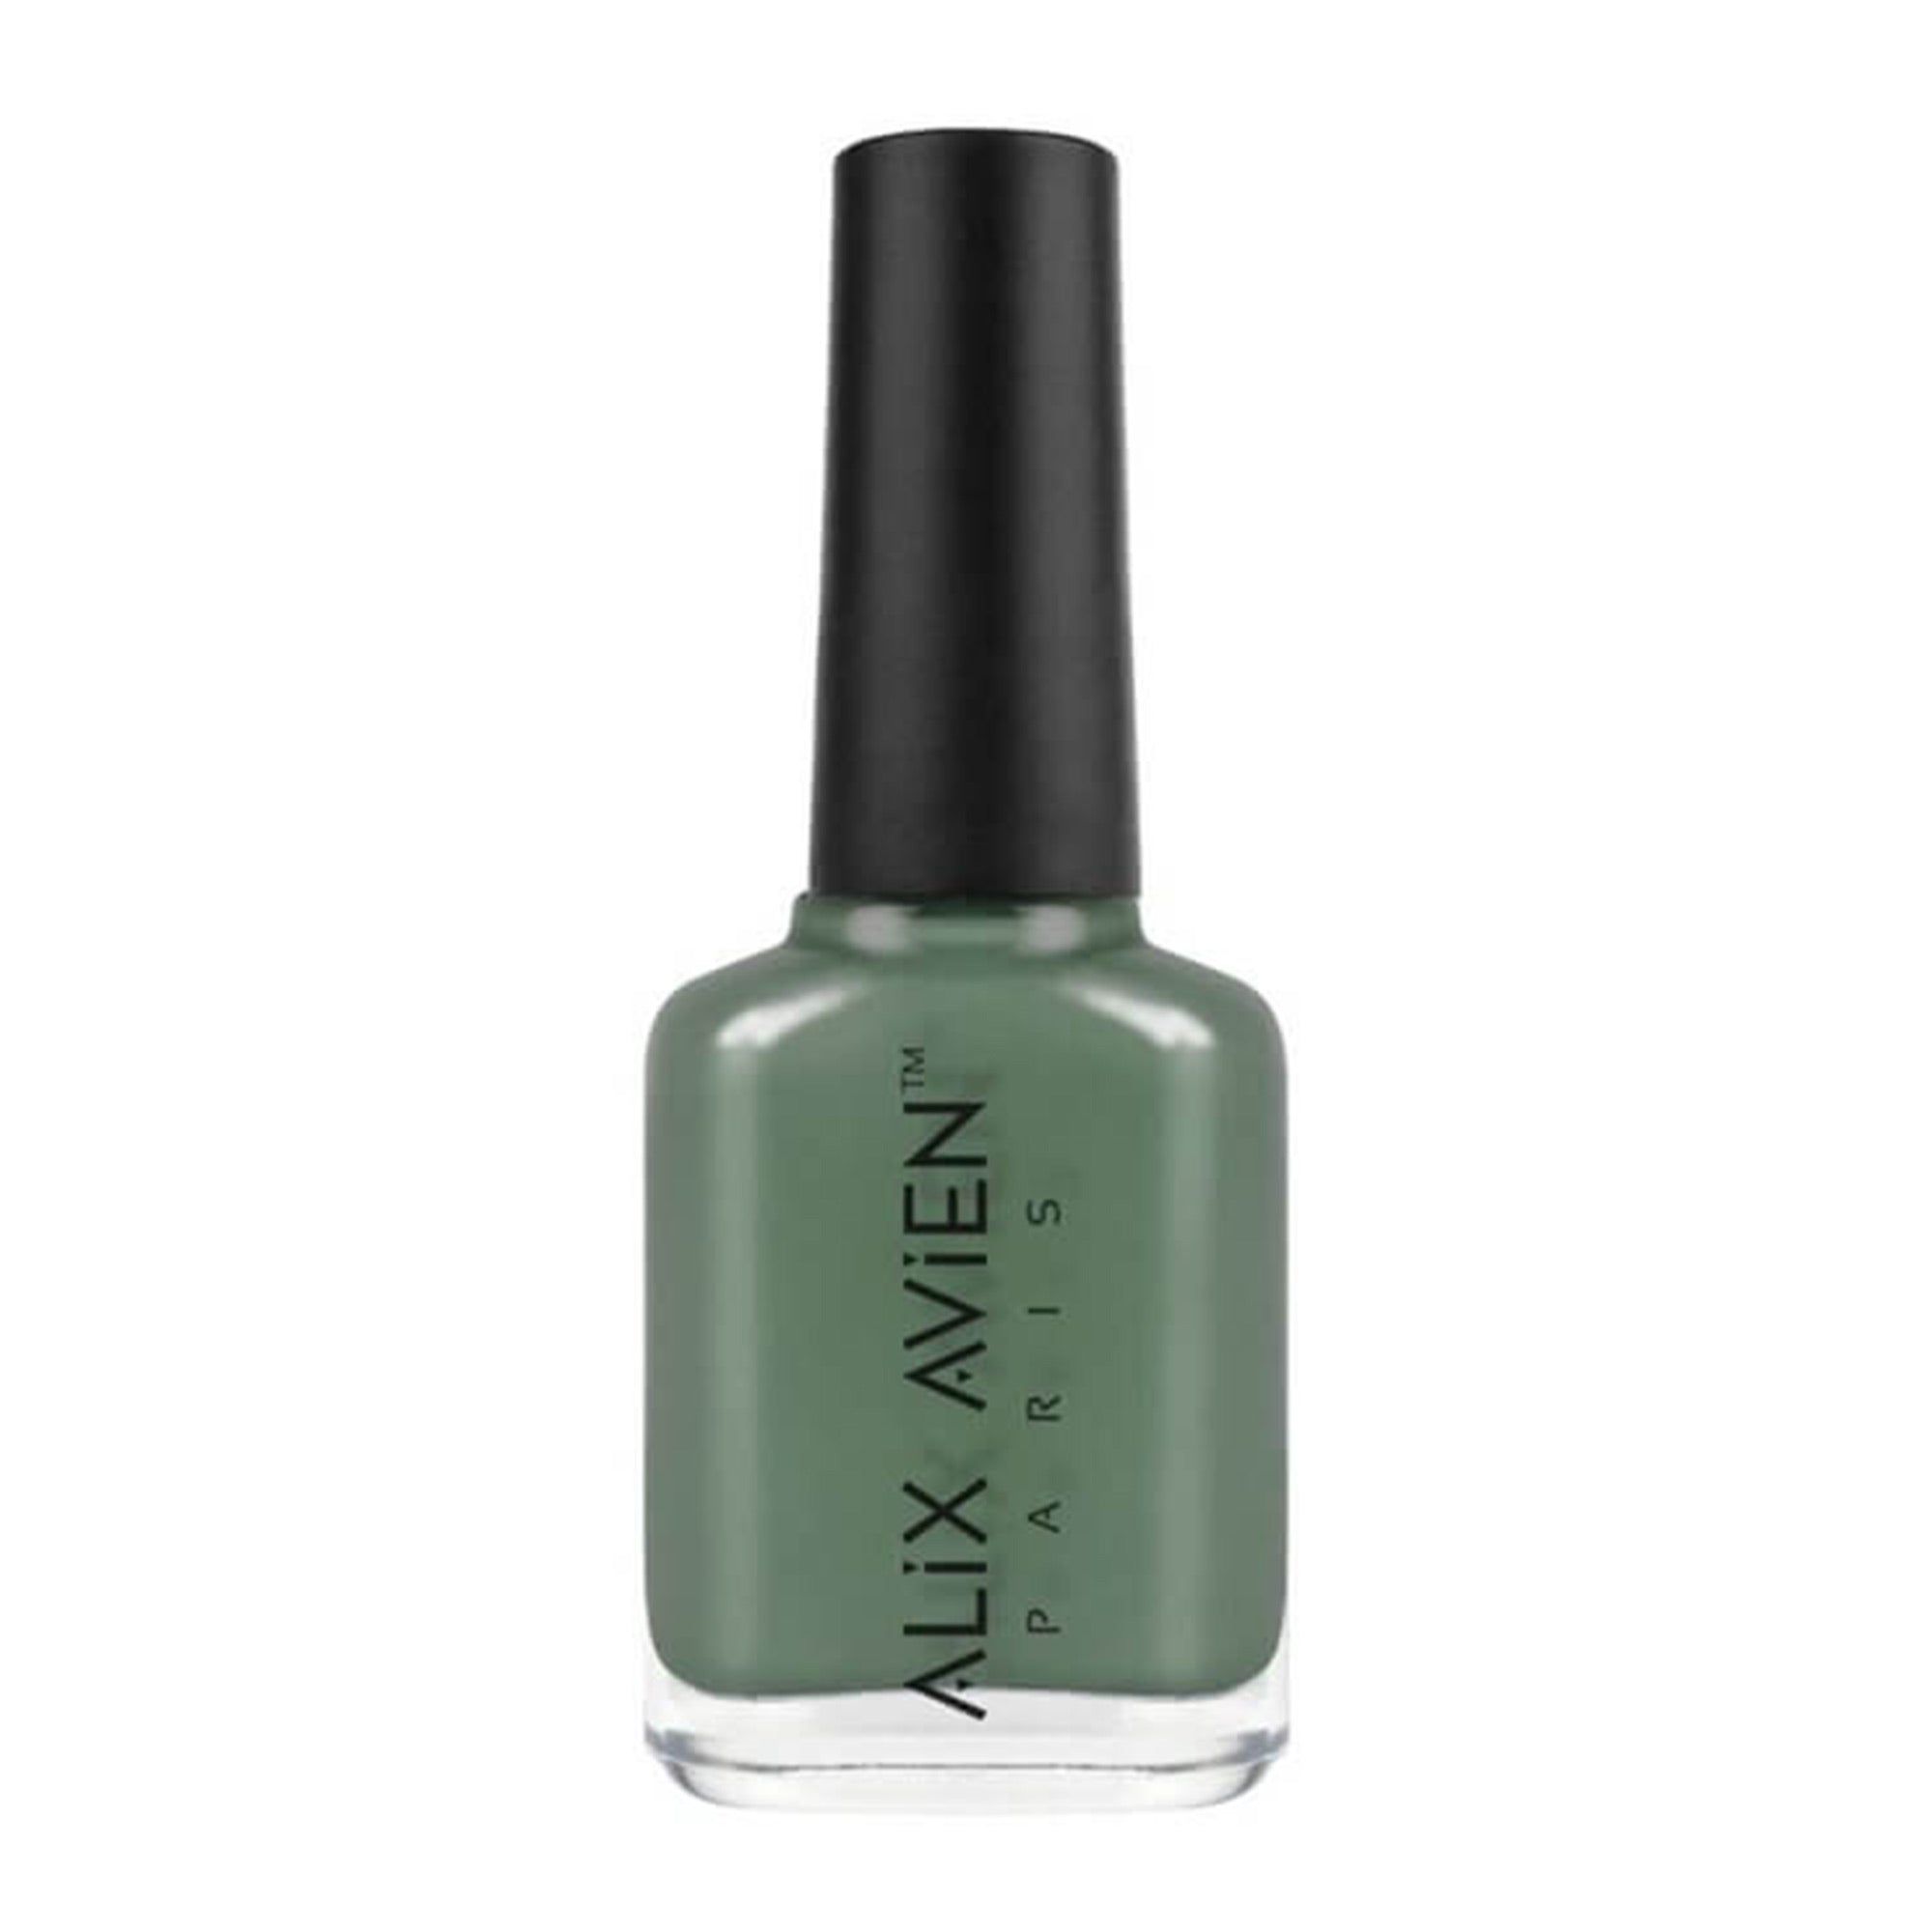 Alix Avien - Nail Polish No.110 (Midnight Green)